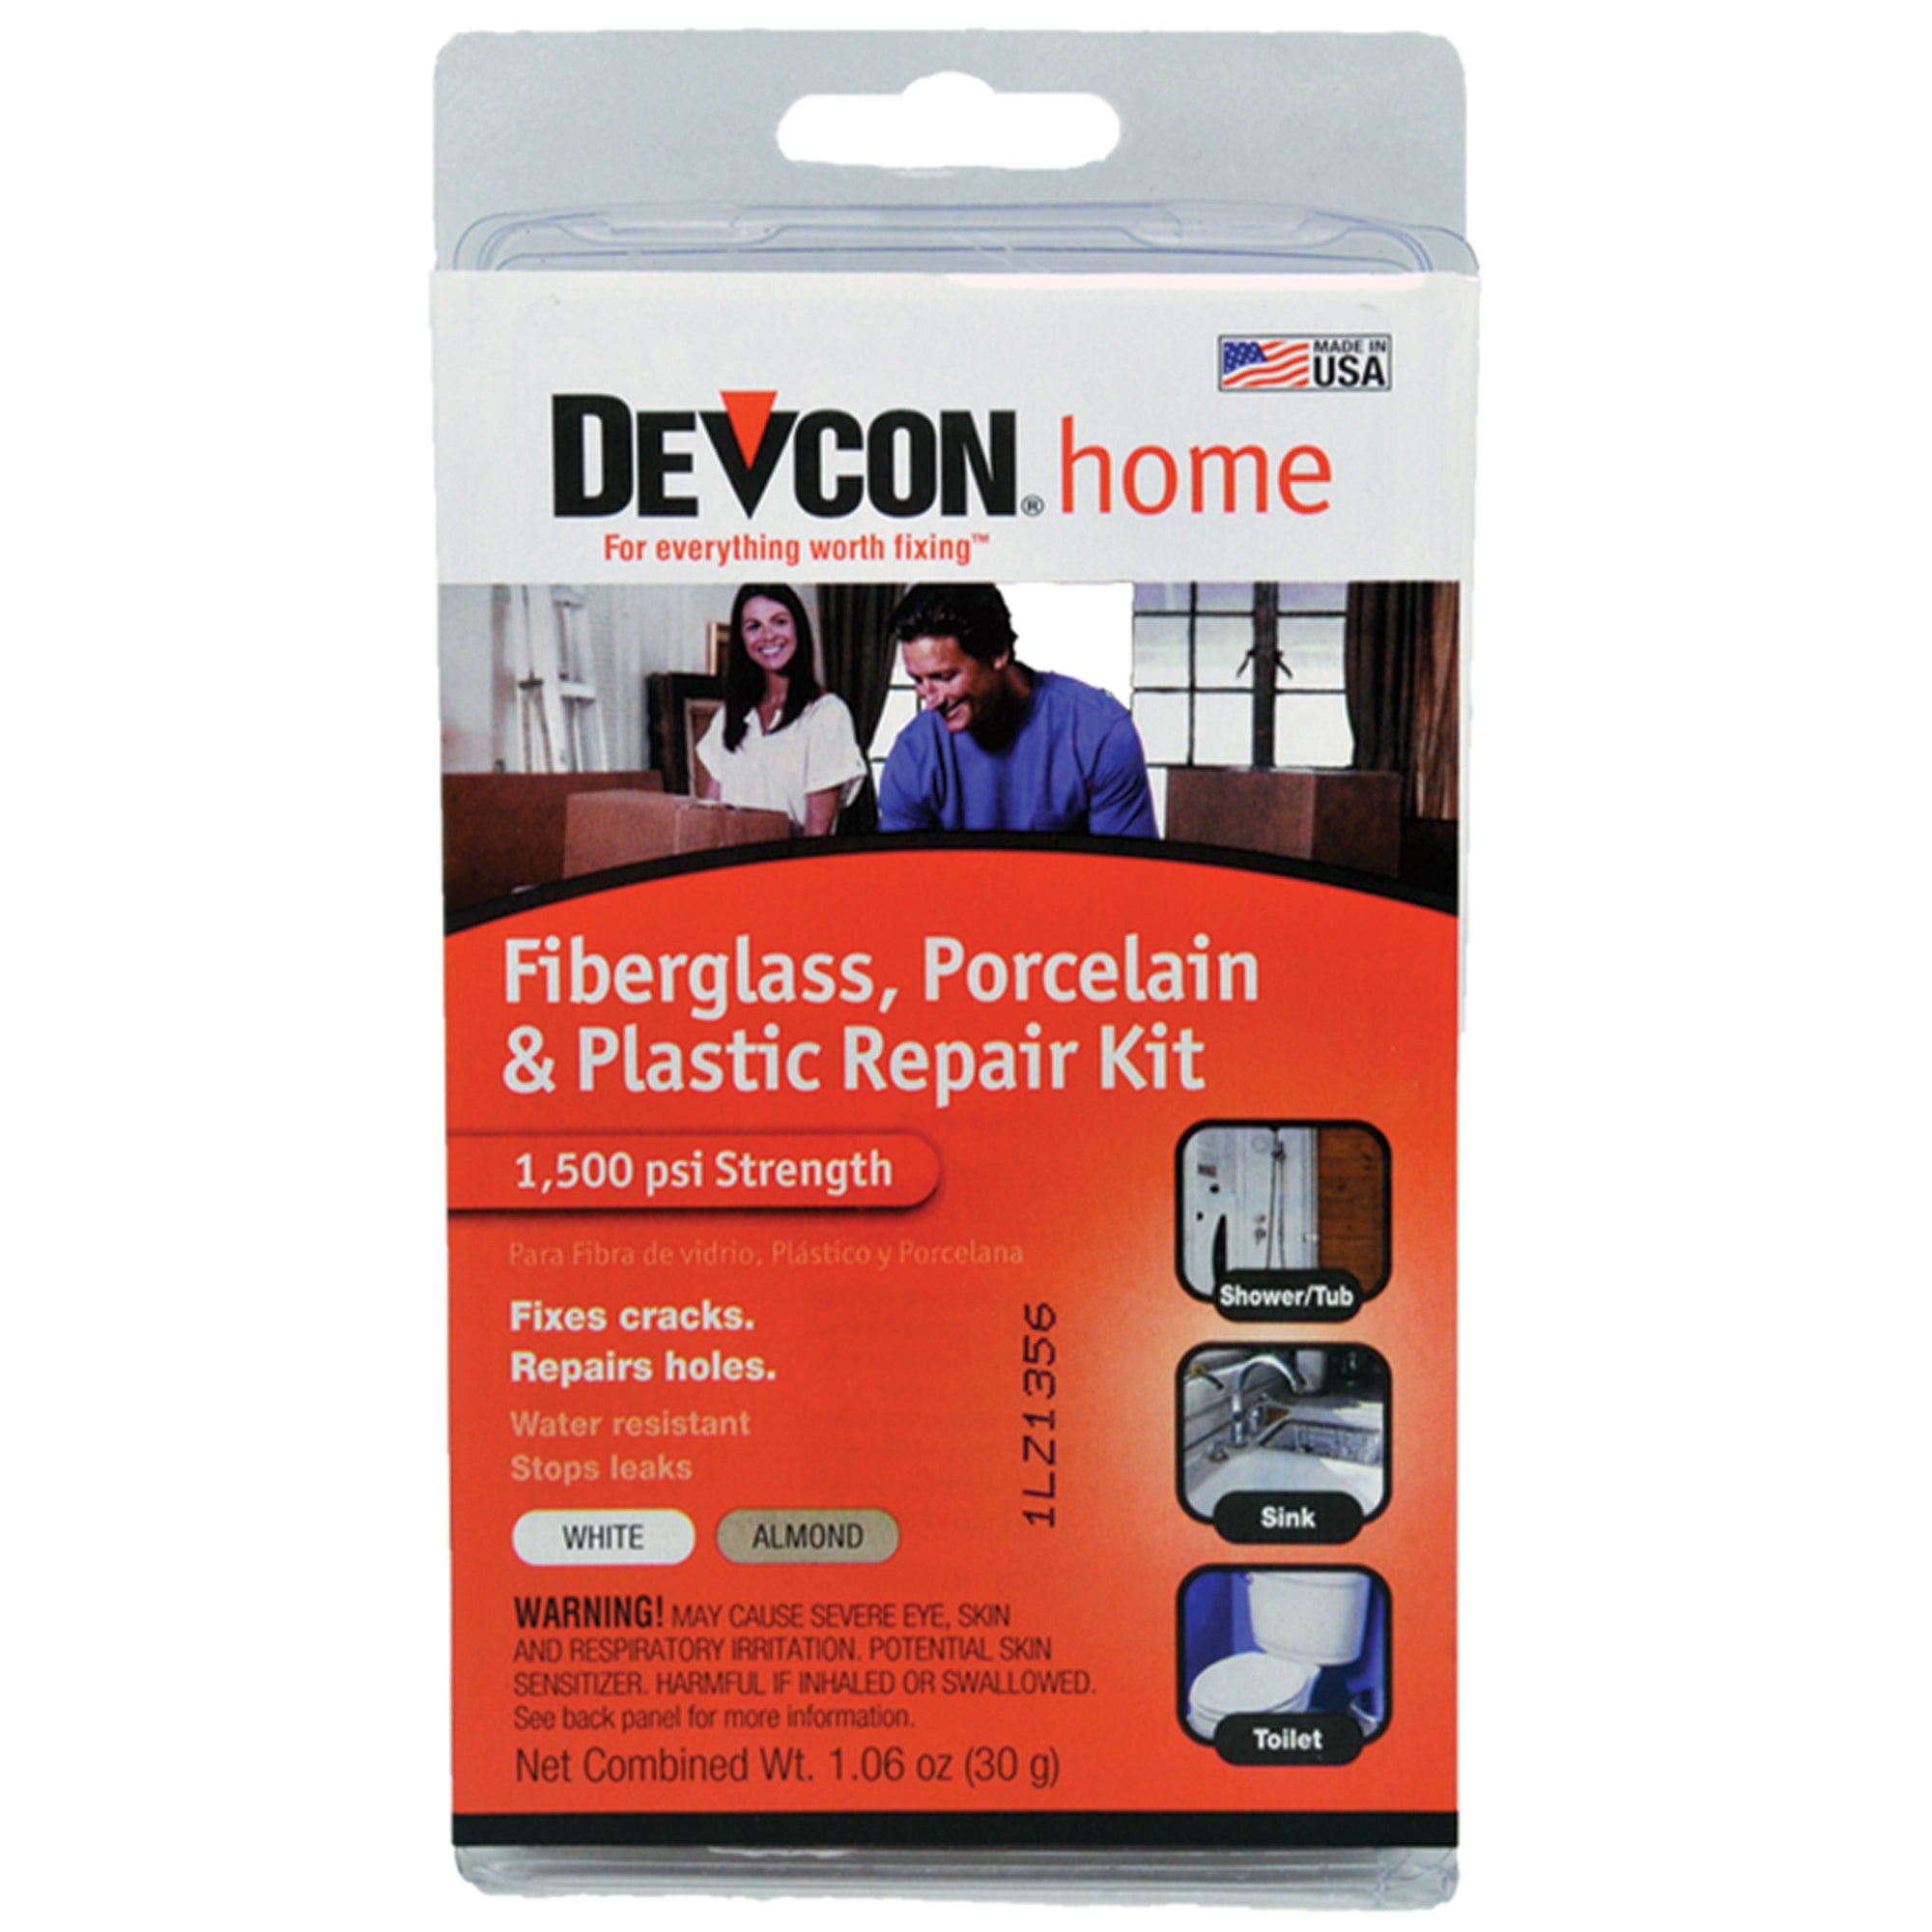 Devcon 002-90216 Fiberglass, Porcelain and Plastic Repair Kit - White/Almond